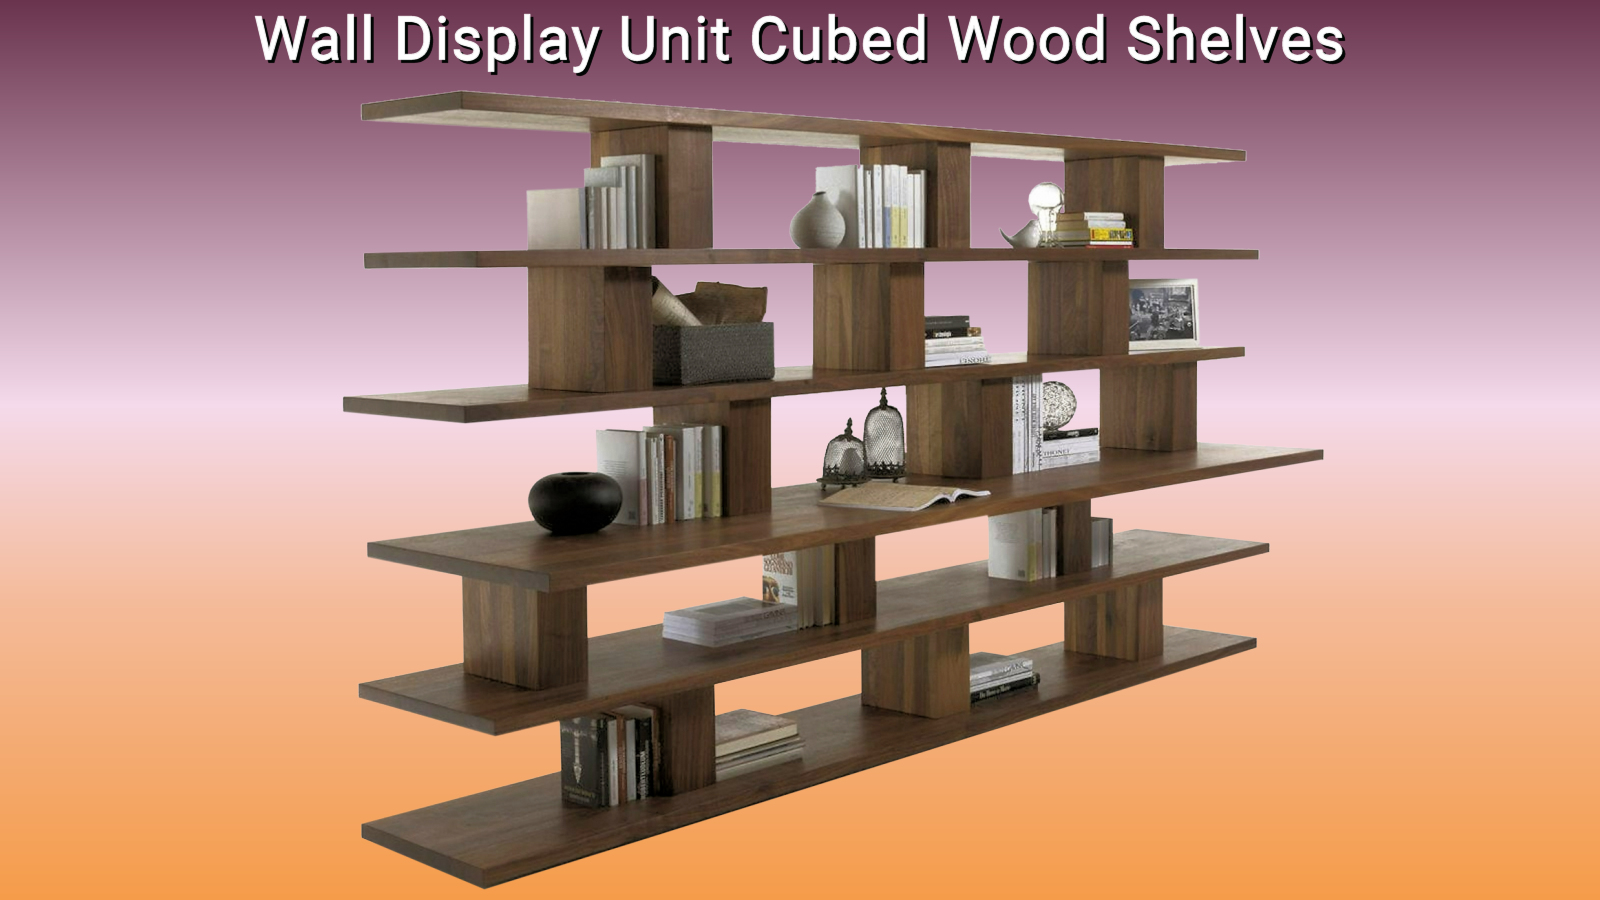 Wall Display Unit Cubed Wood Shelves